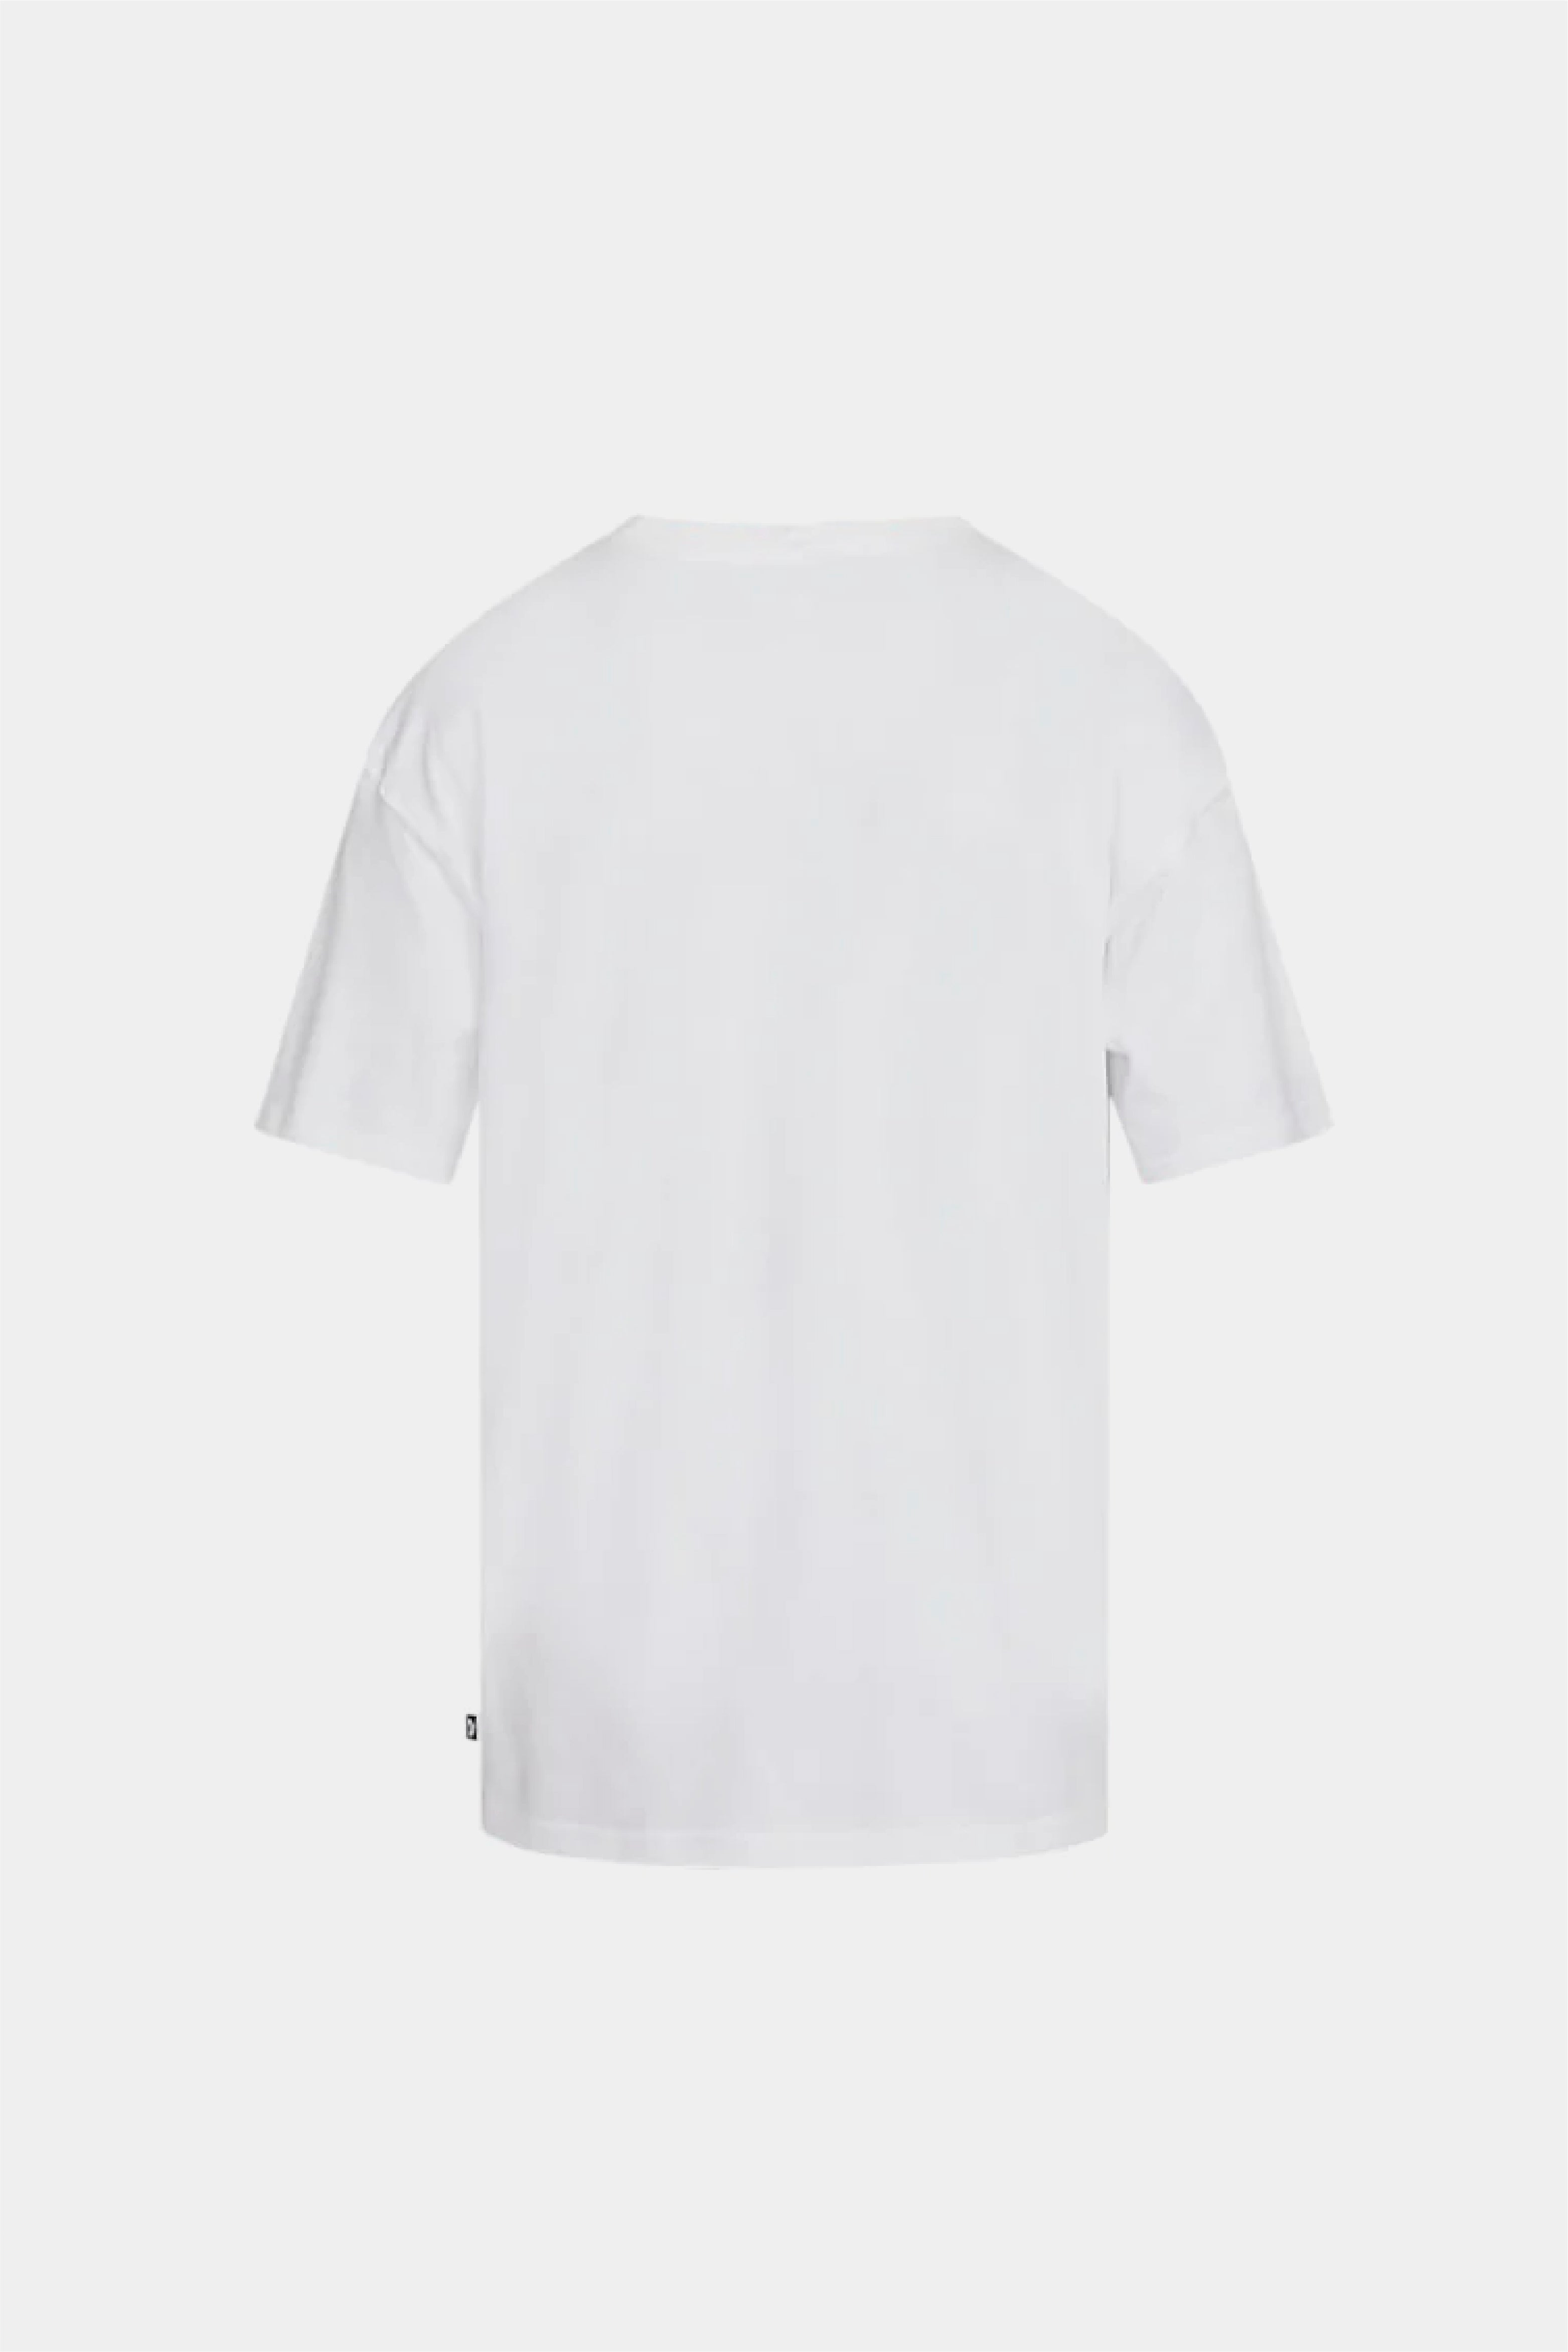 Selectshop FRAME - NIKE SB Magcard Tee T-Shirts Concept Store Dubai